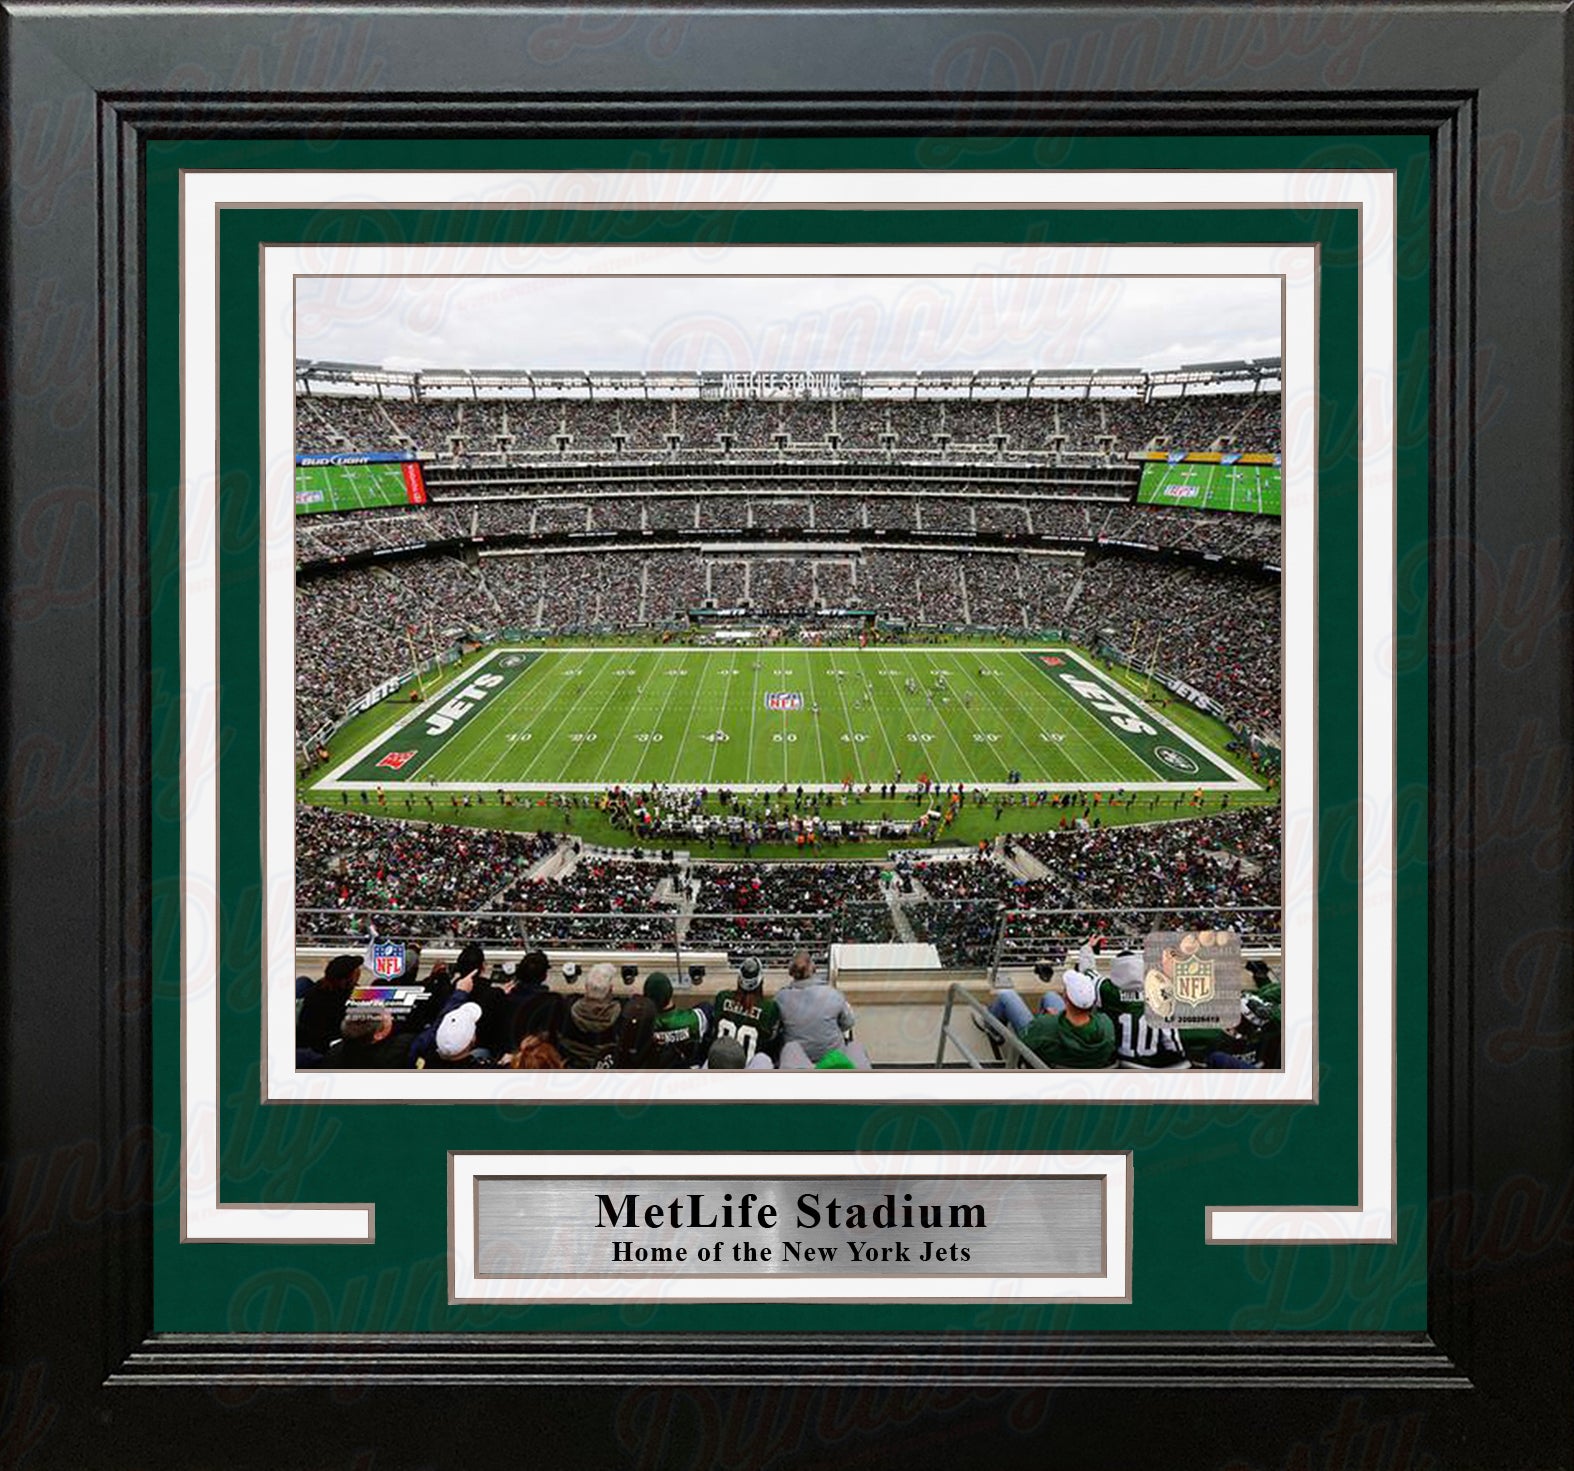 New York Jets MetLife Stadium 8' x 10' Framed Football Photo